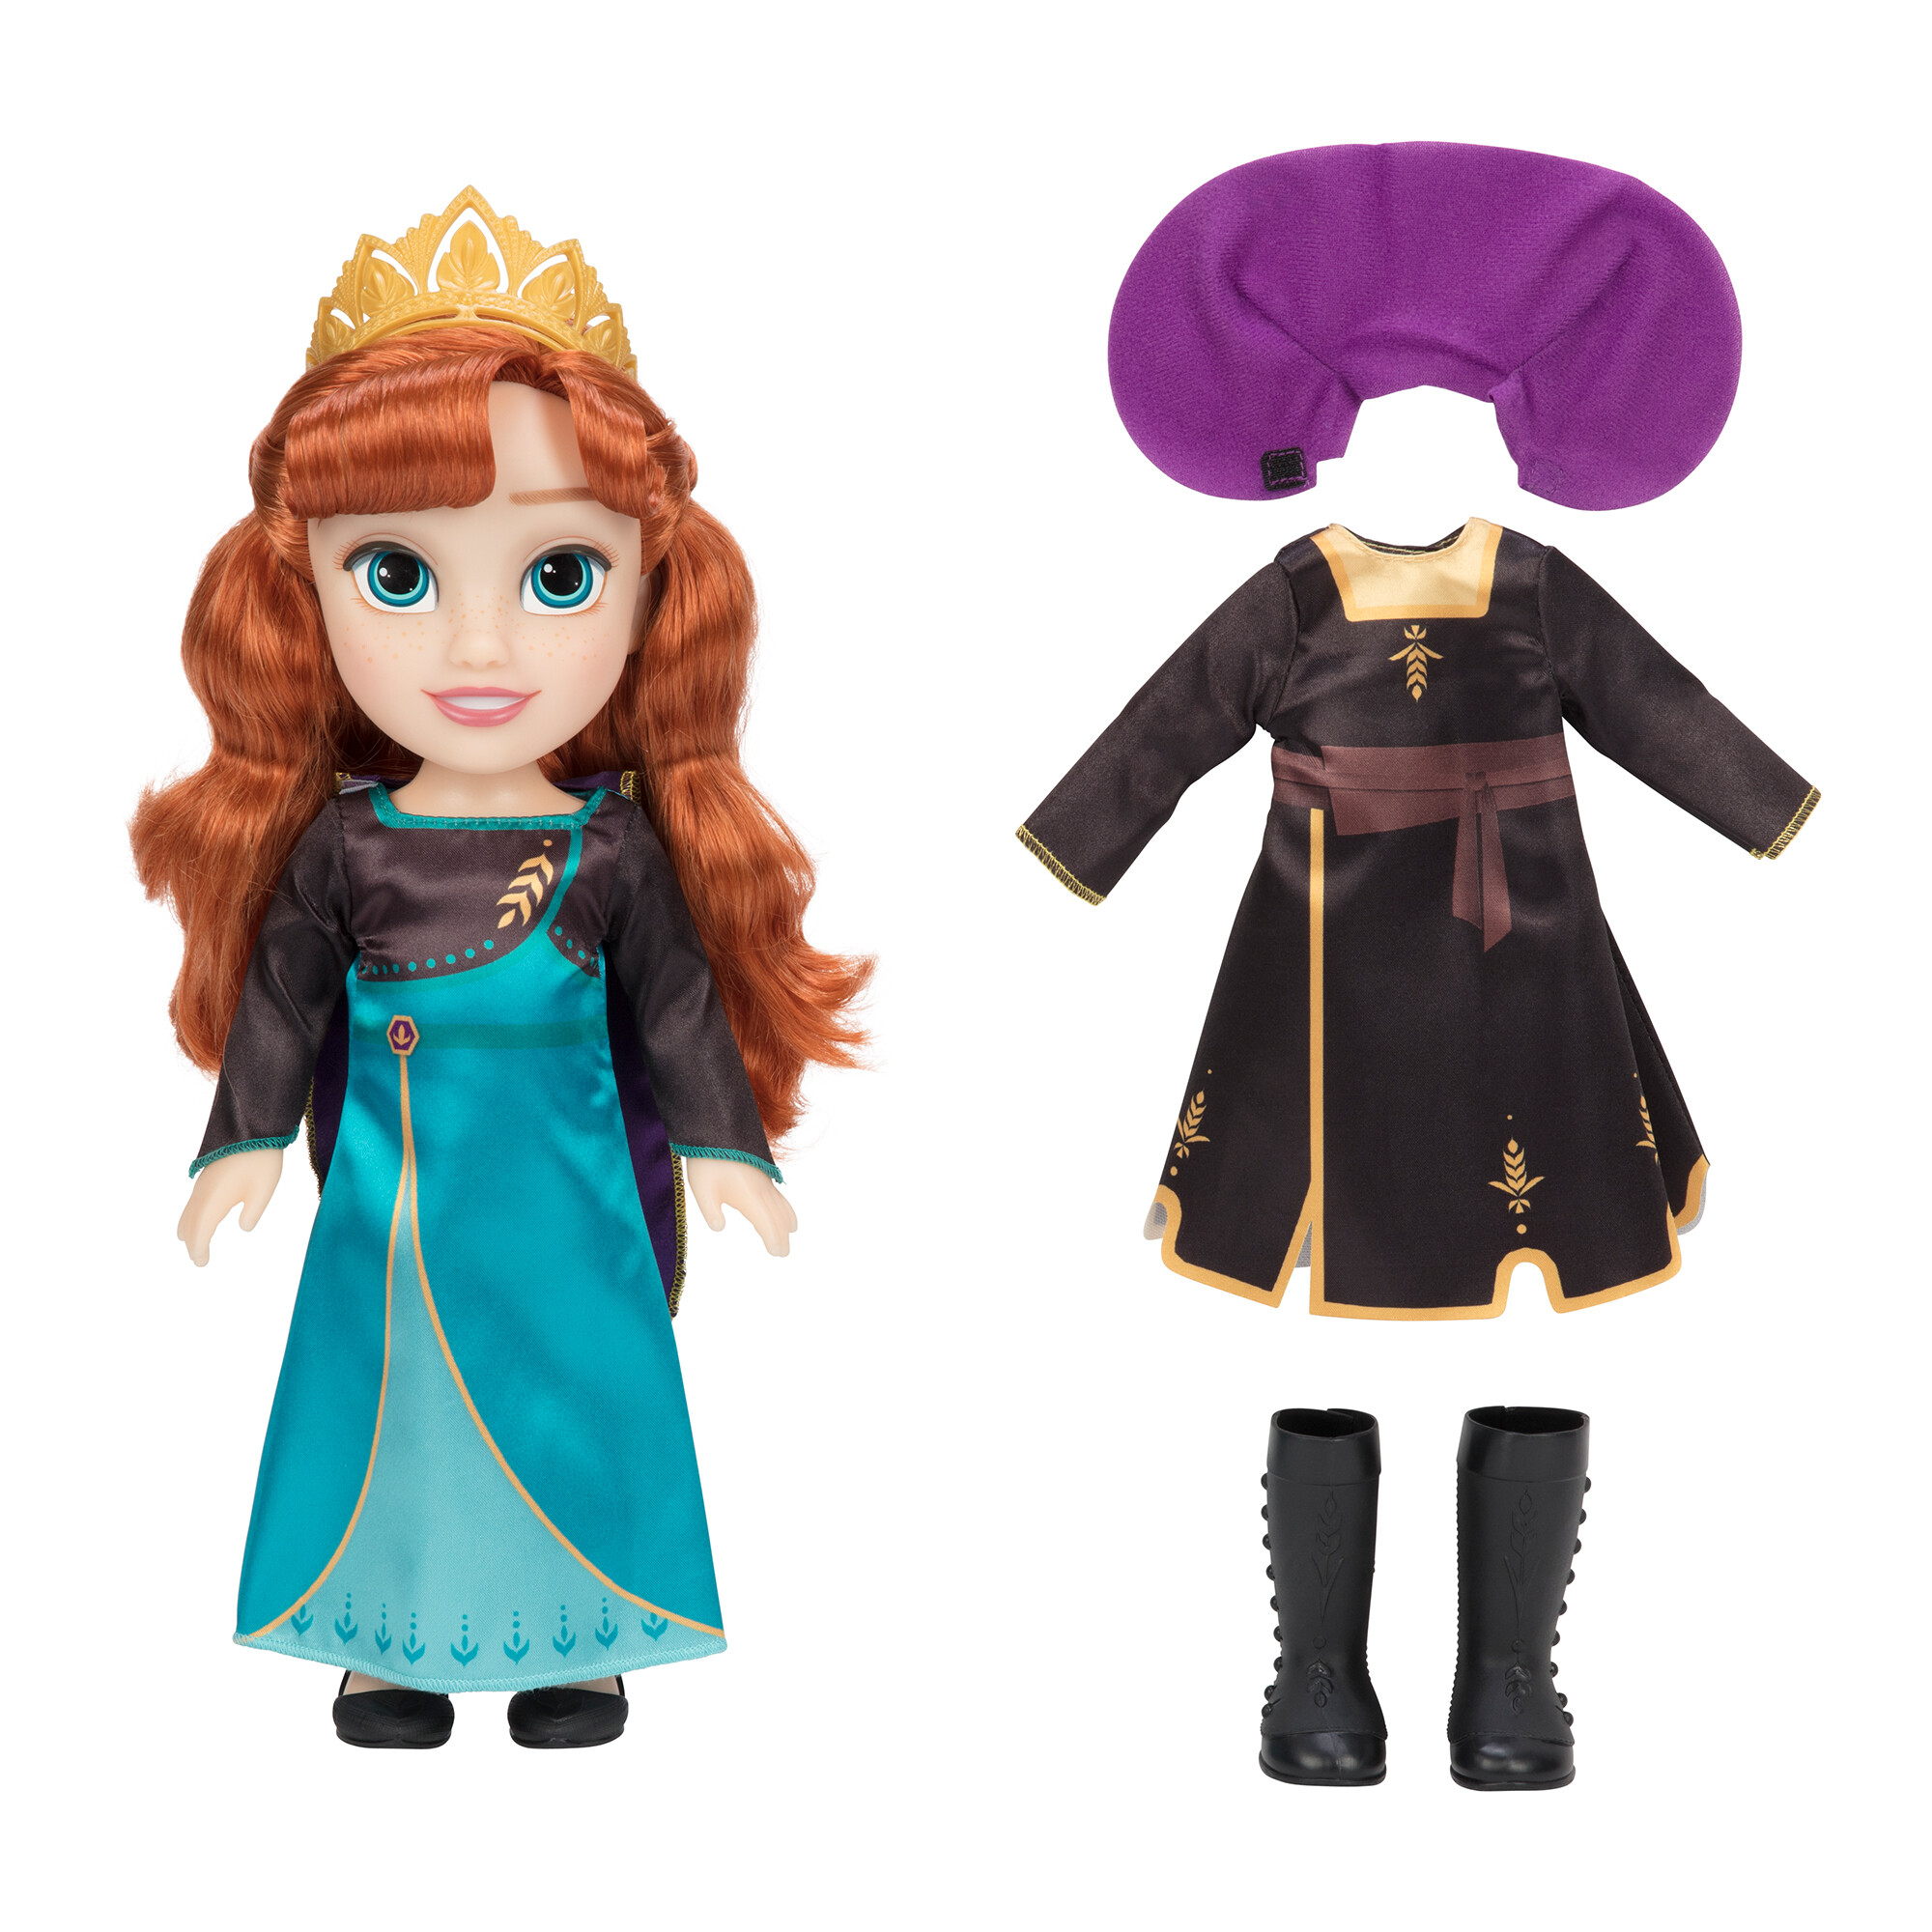 Disney frozen bambola da 38 cm di anna con accessori - DISNEY PRINCESS, Frozen